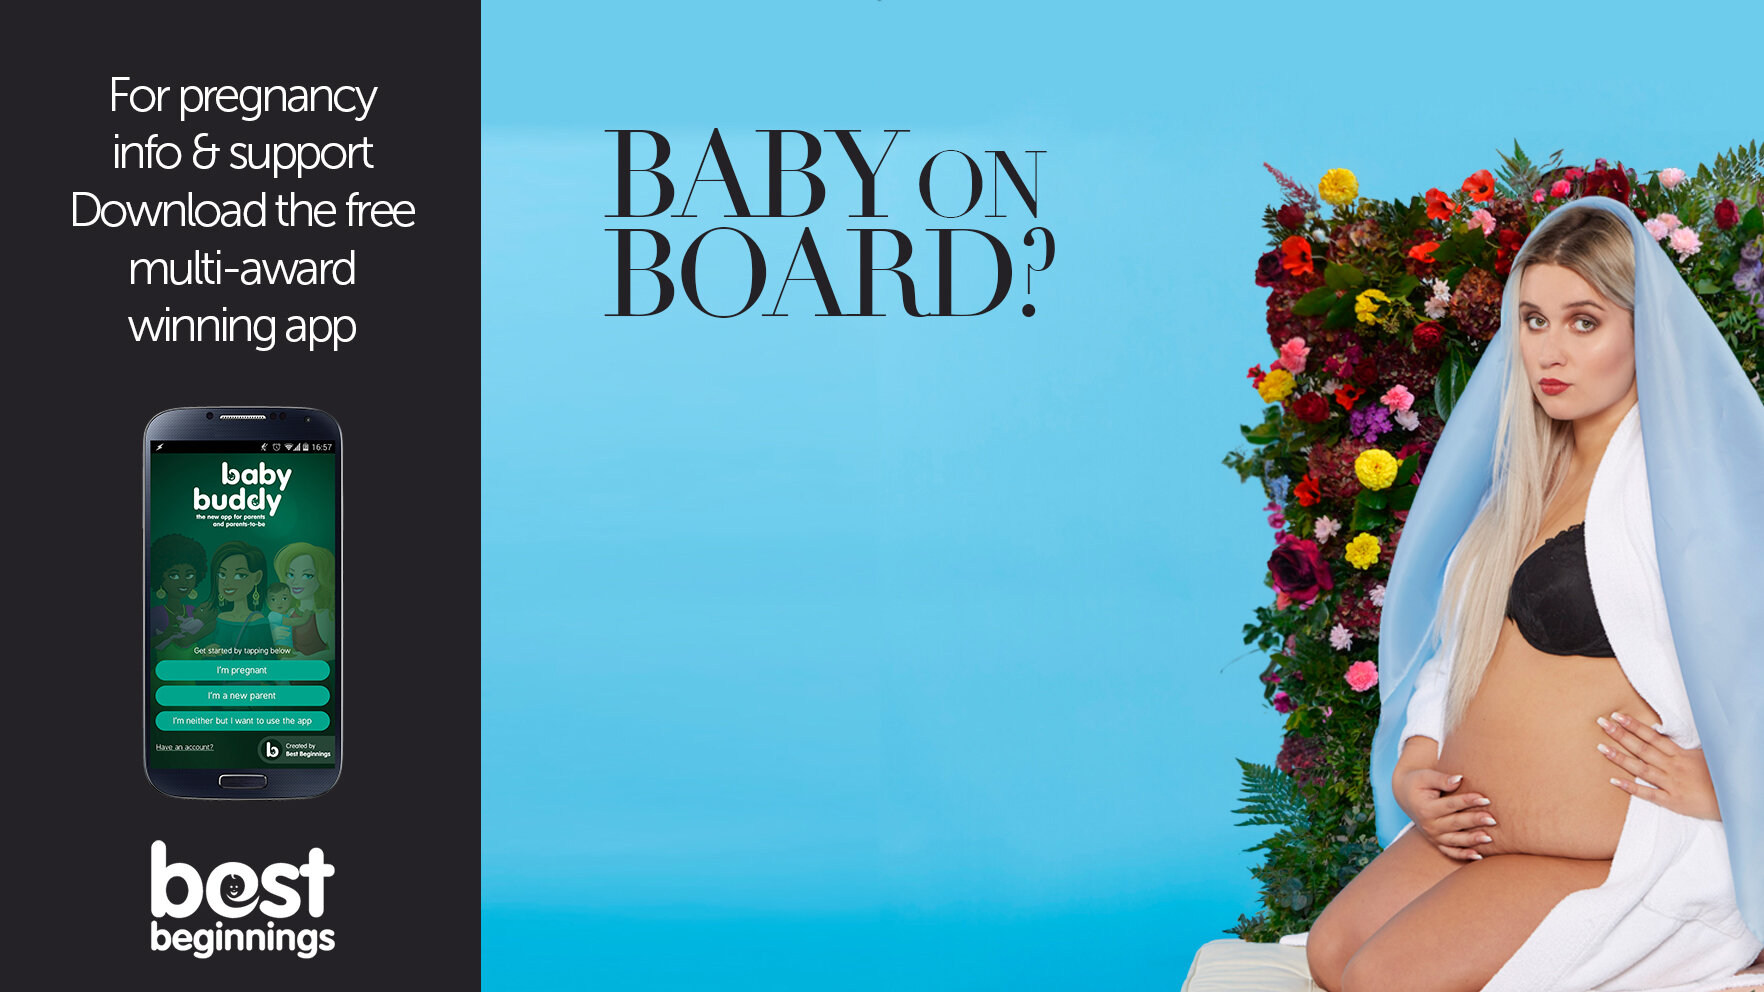 Michael+Hilbrown+Florist+-+Best+Beginings+Campaign.jpg